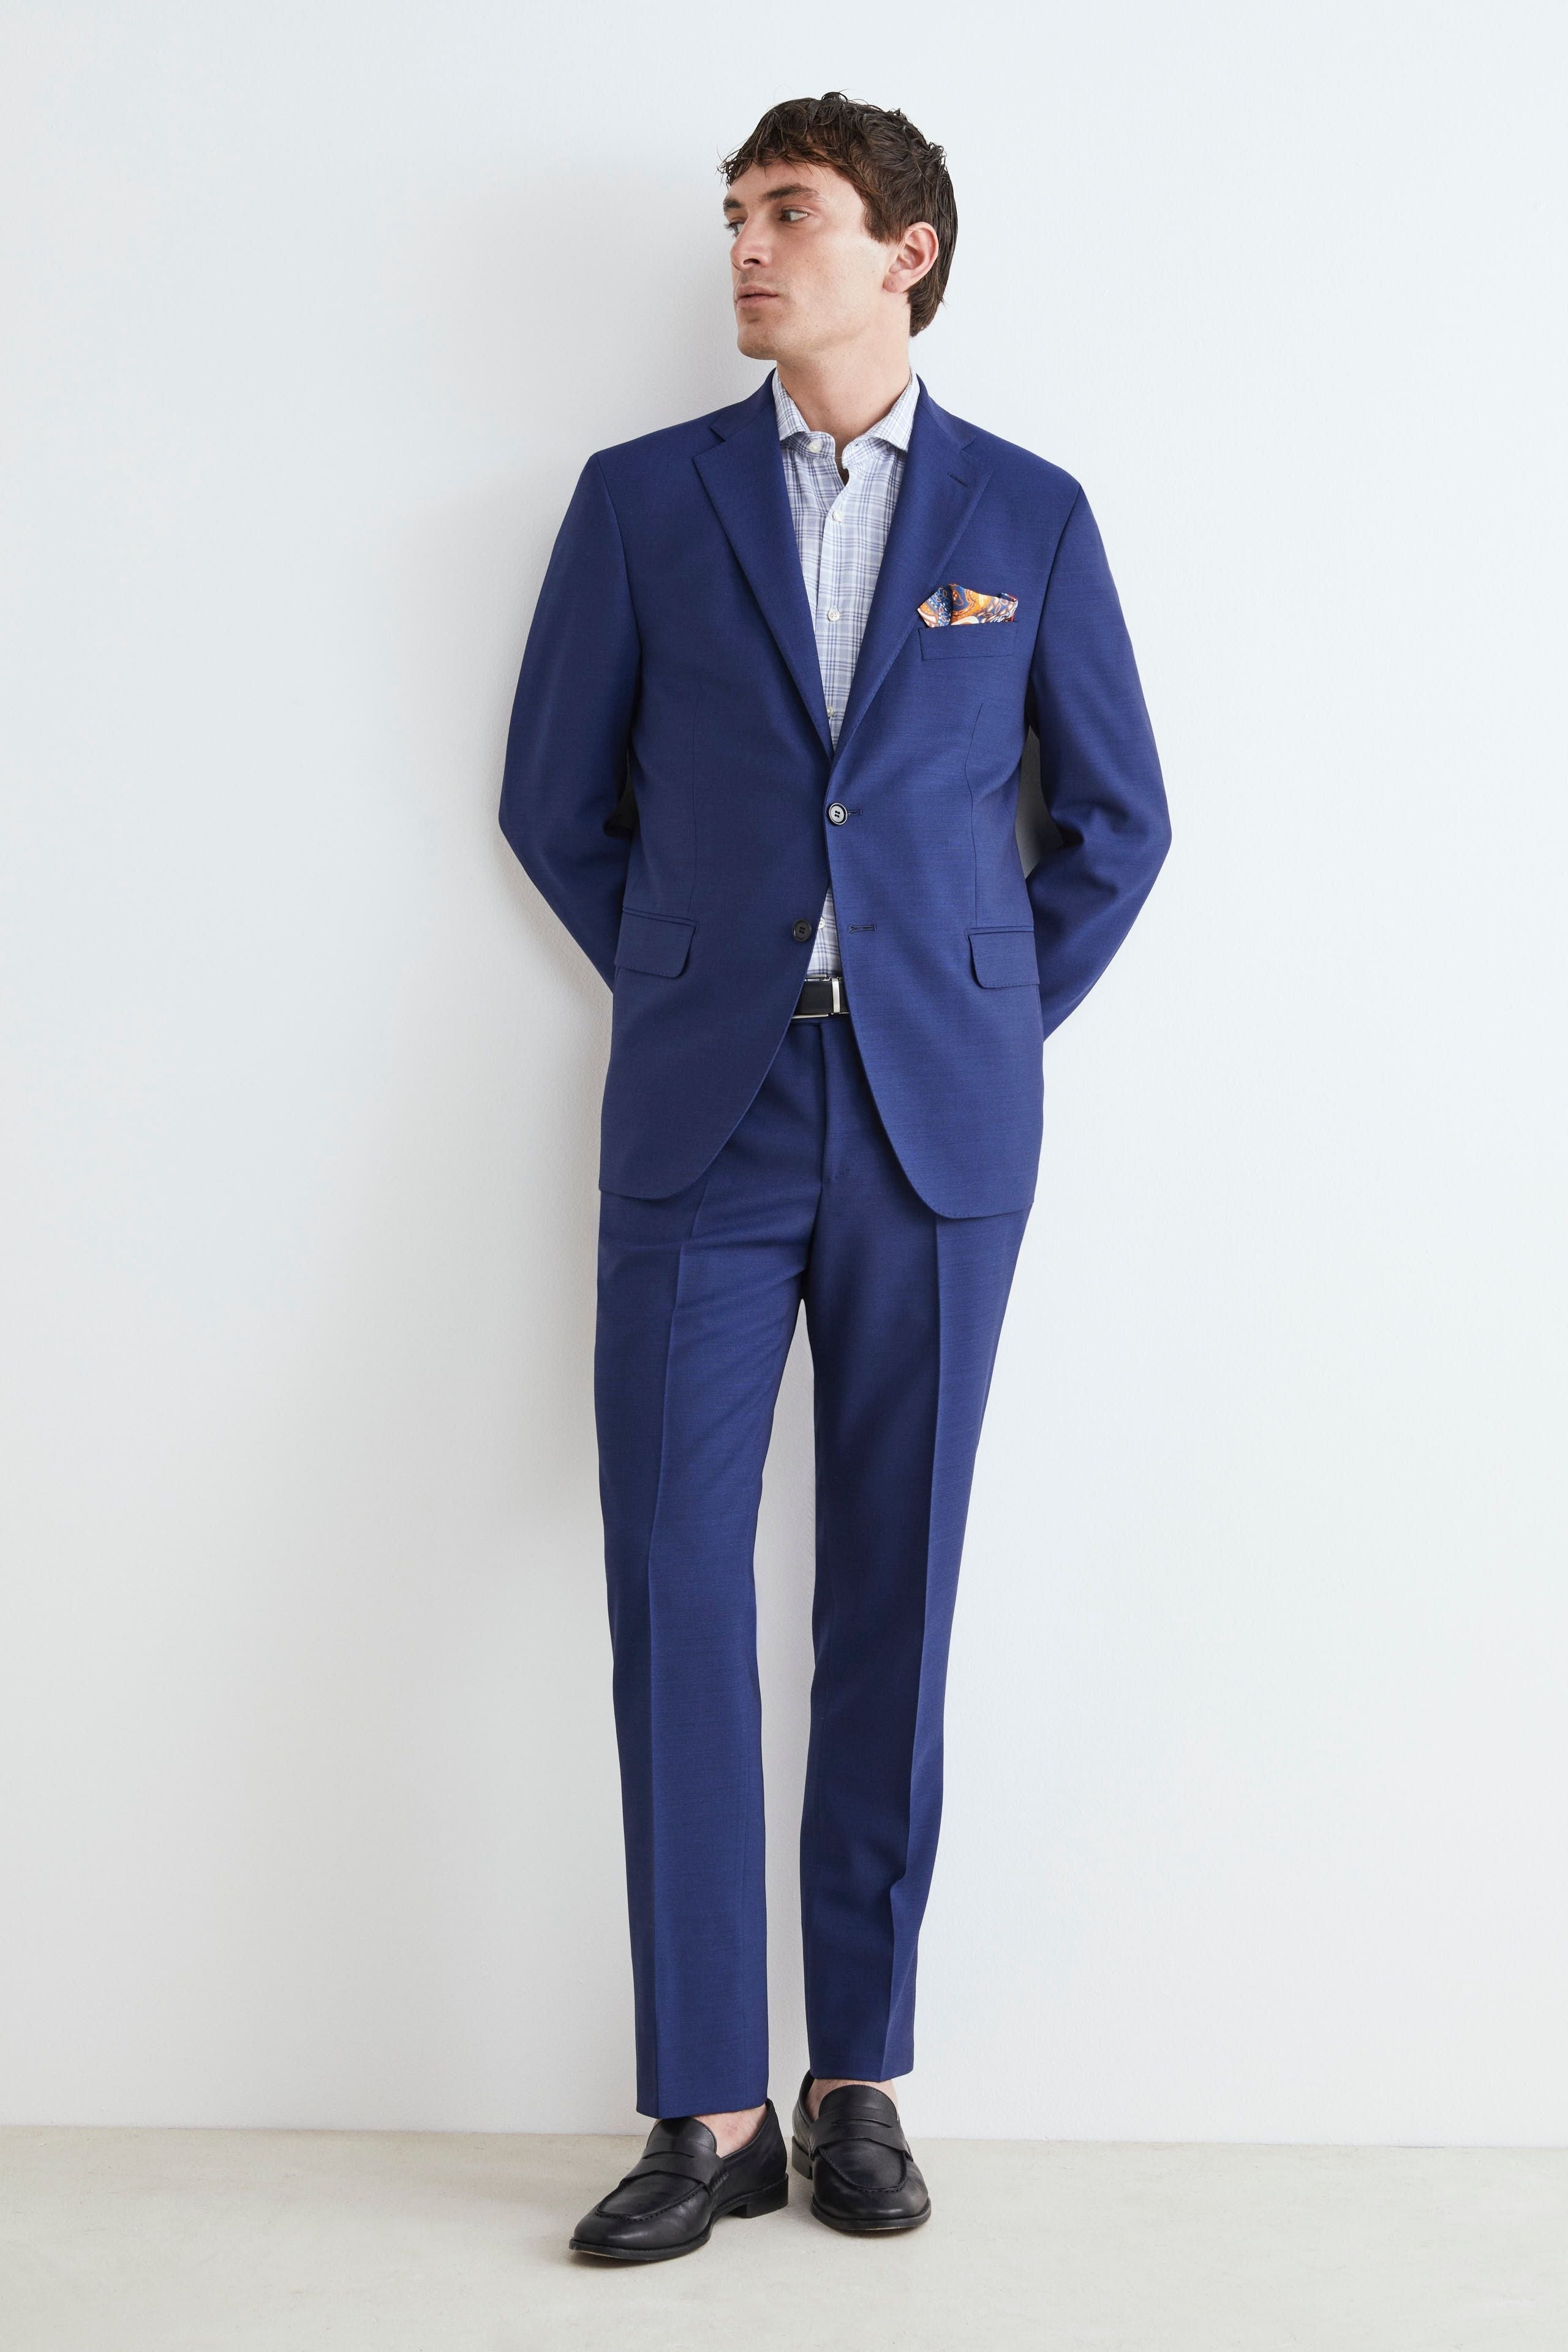 Bluette wool suit - Medium blue